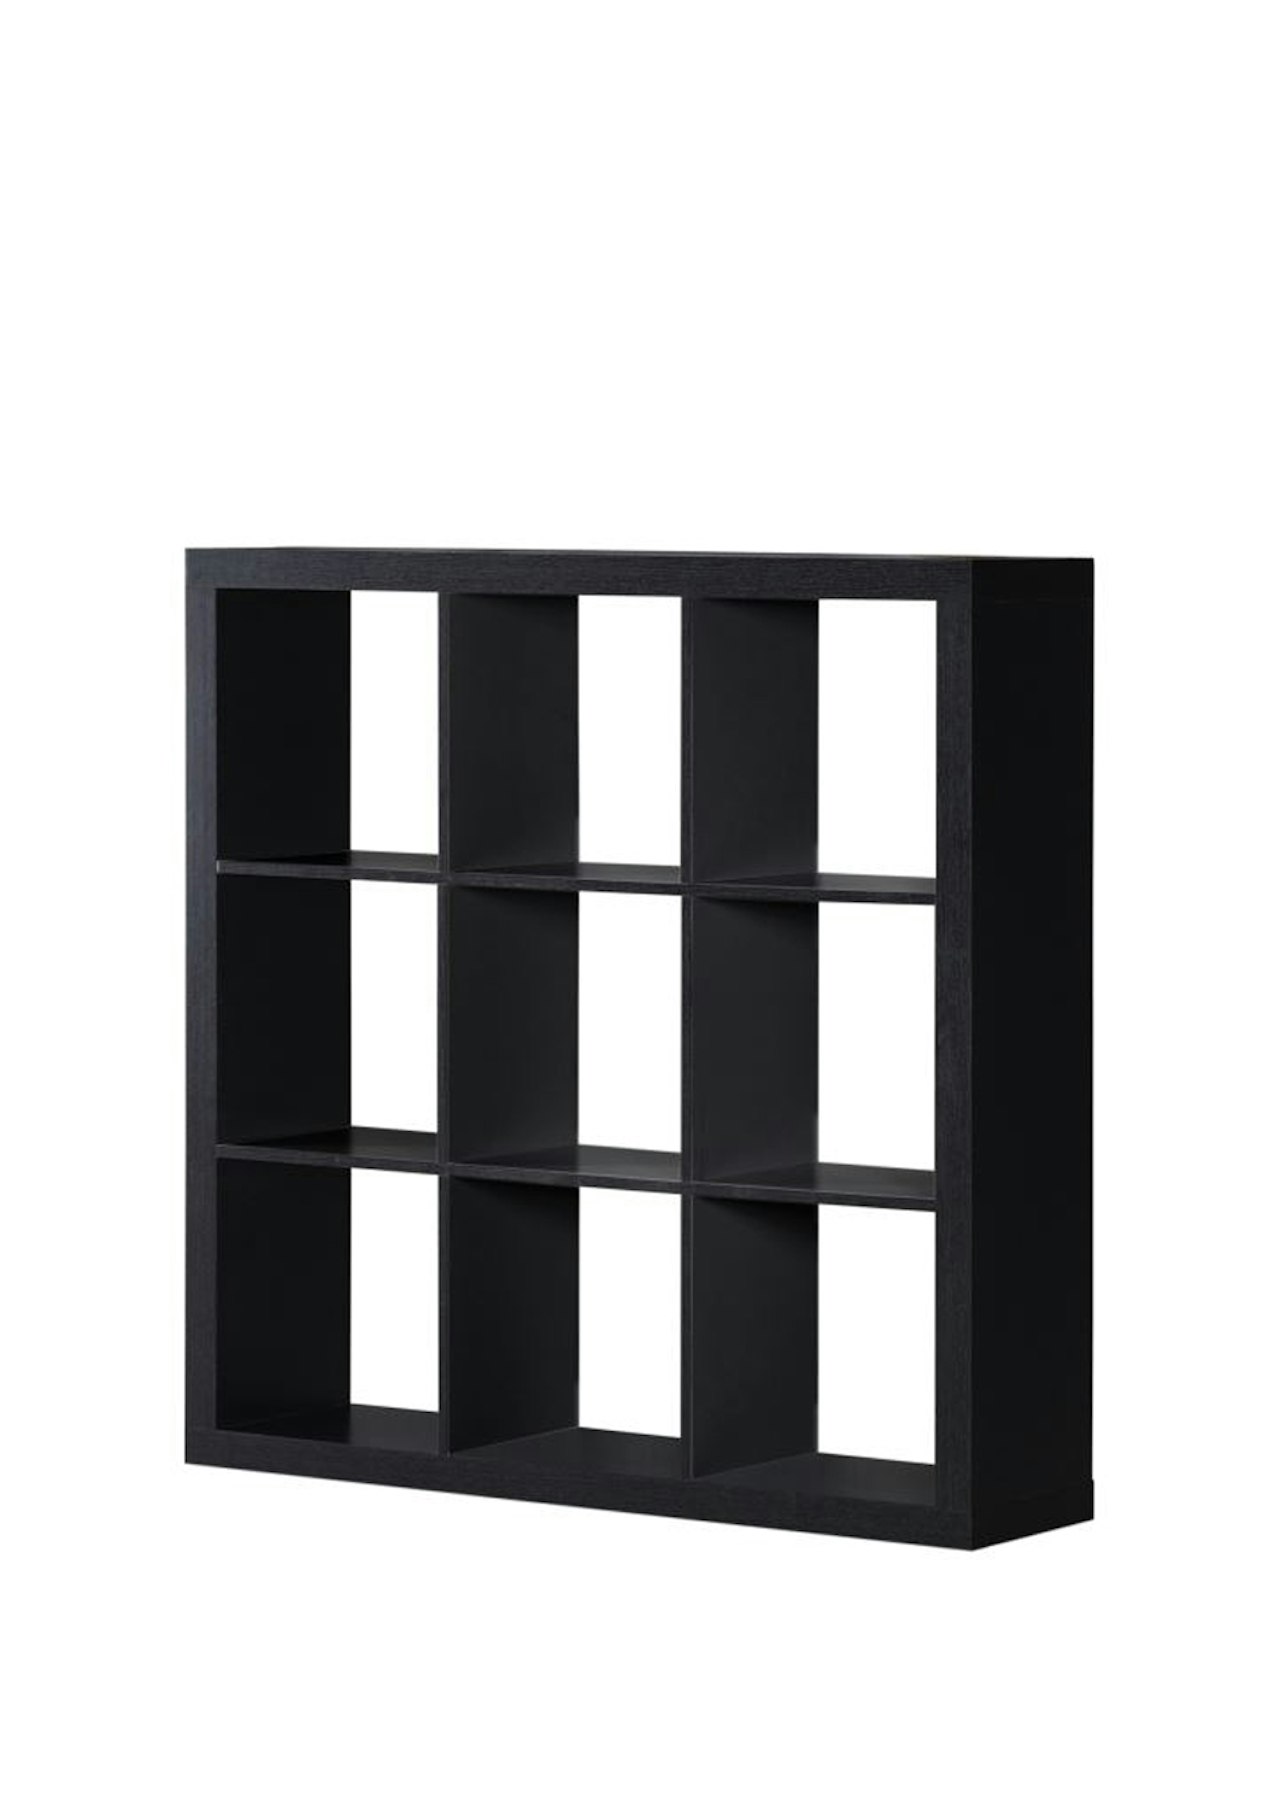 Tiko 9 Cube Bookshelf The Big Furniture Home Clearance Onceit